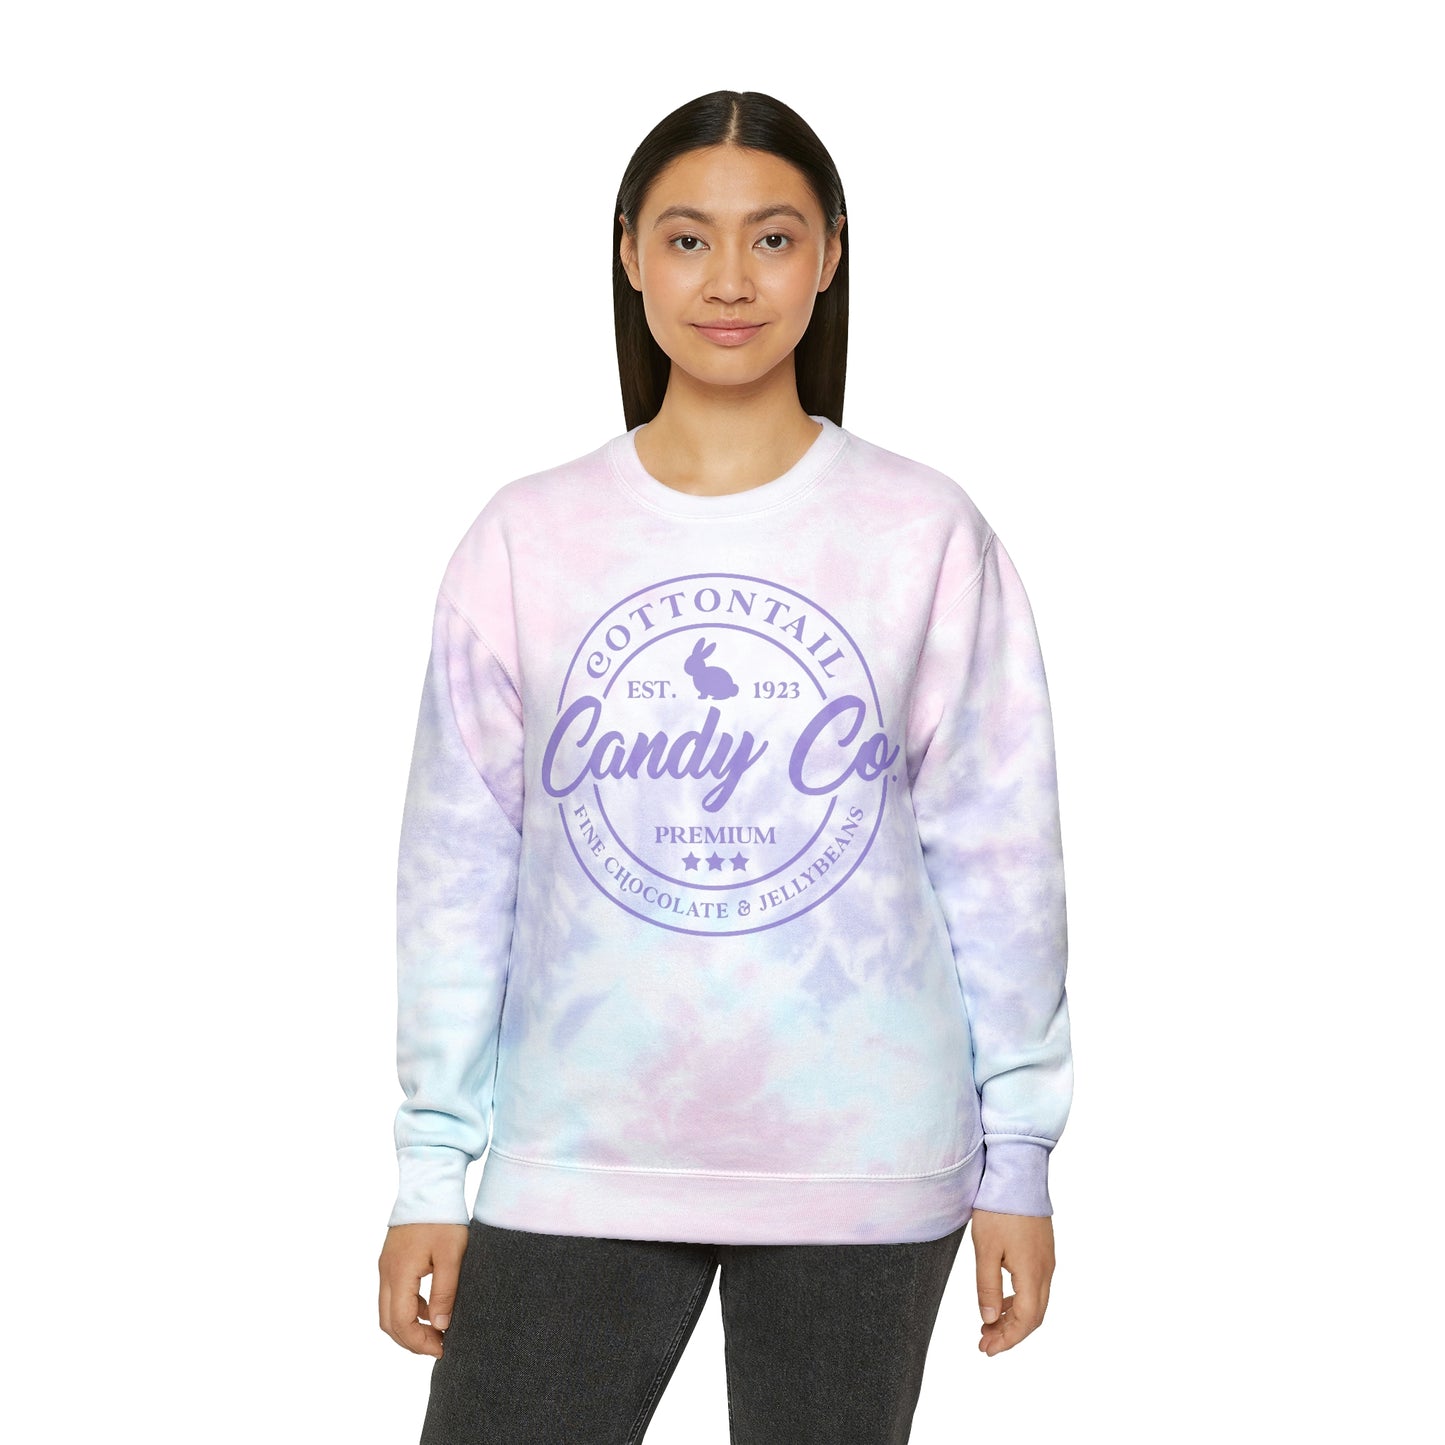 "Cotton Tail Candy Sweatshirt" Unisex Tie-Dye Sweatshirt